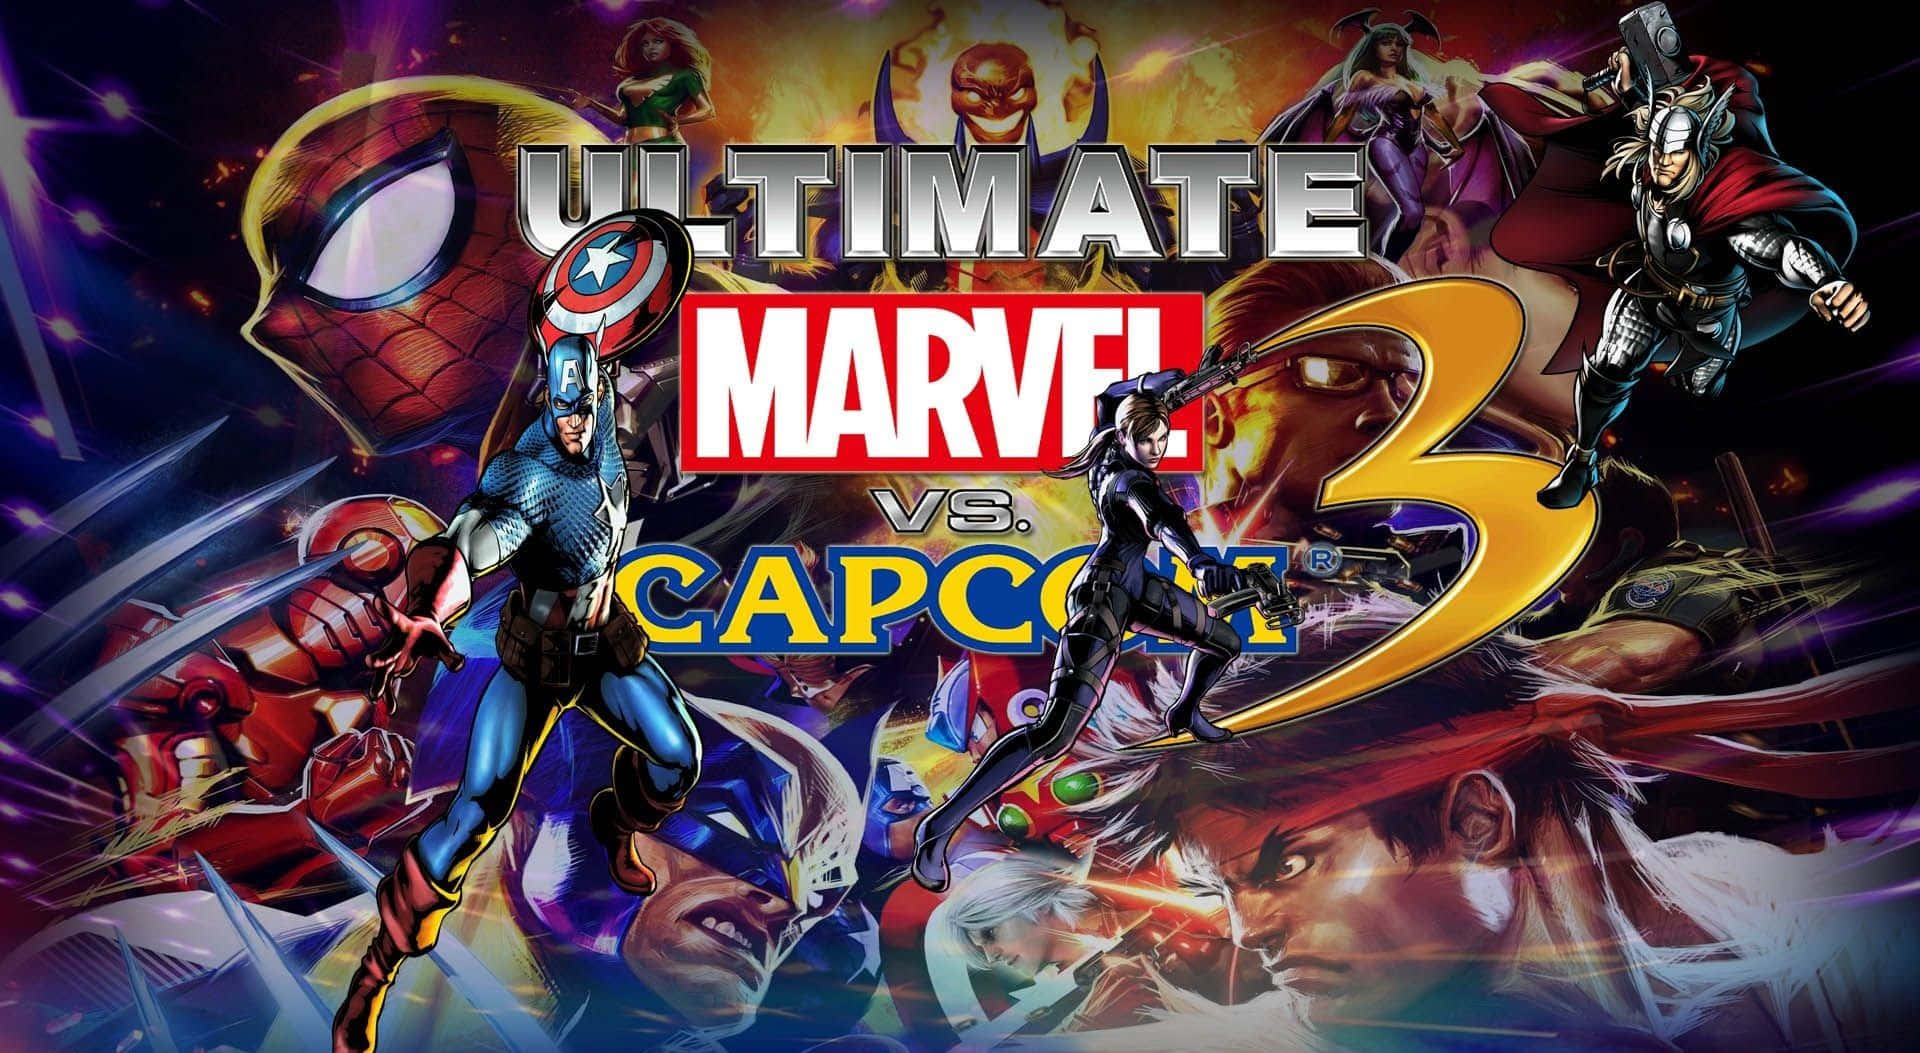 Marvel vs Capcom wallpaper 30 images pictures download